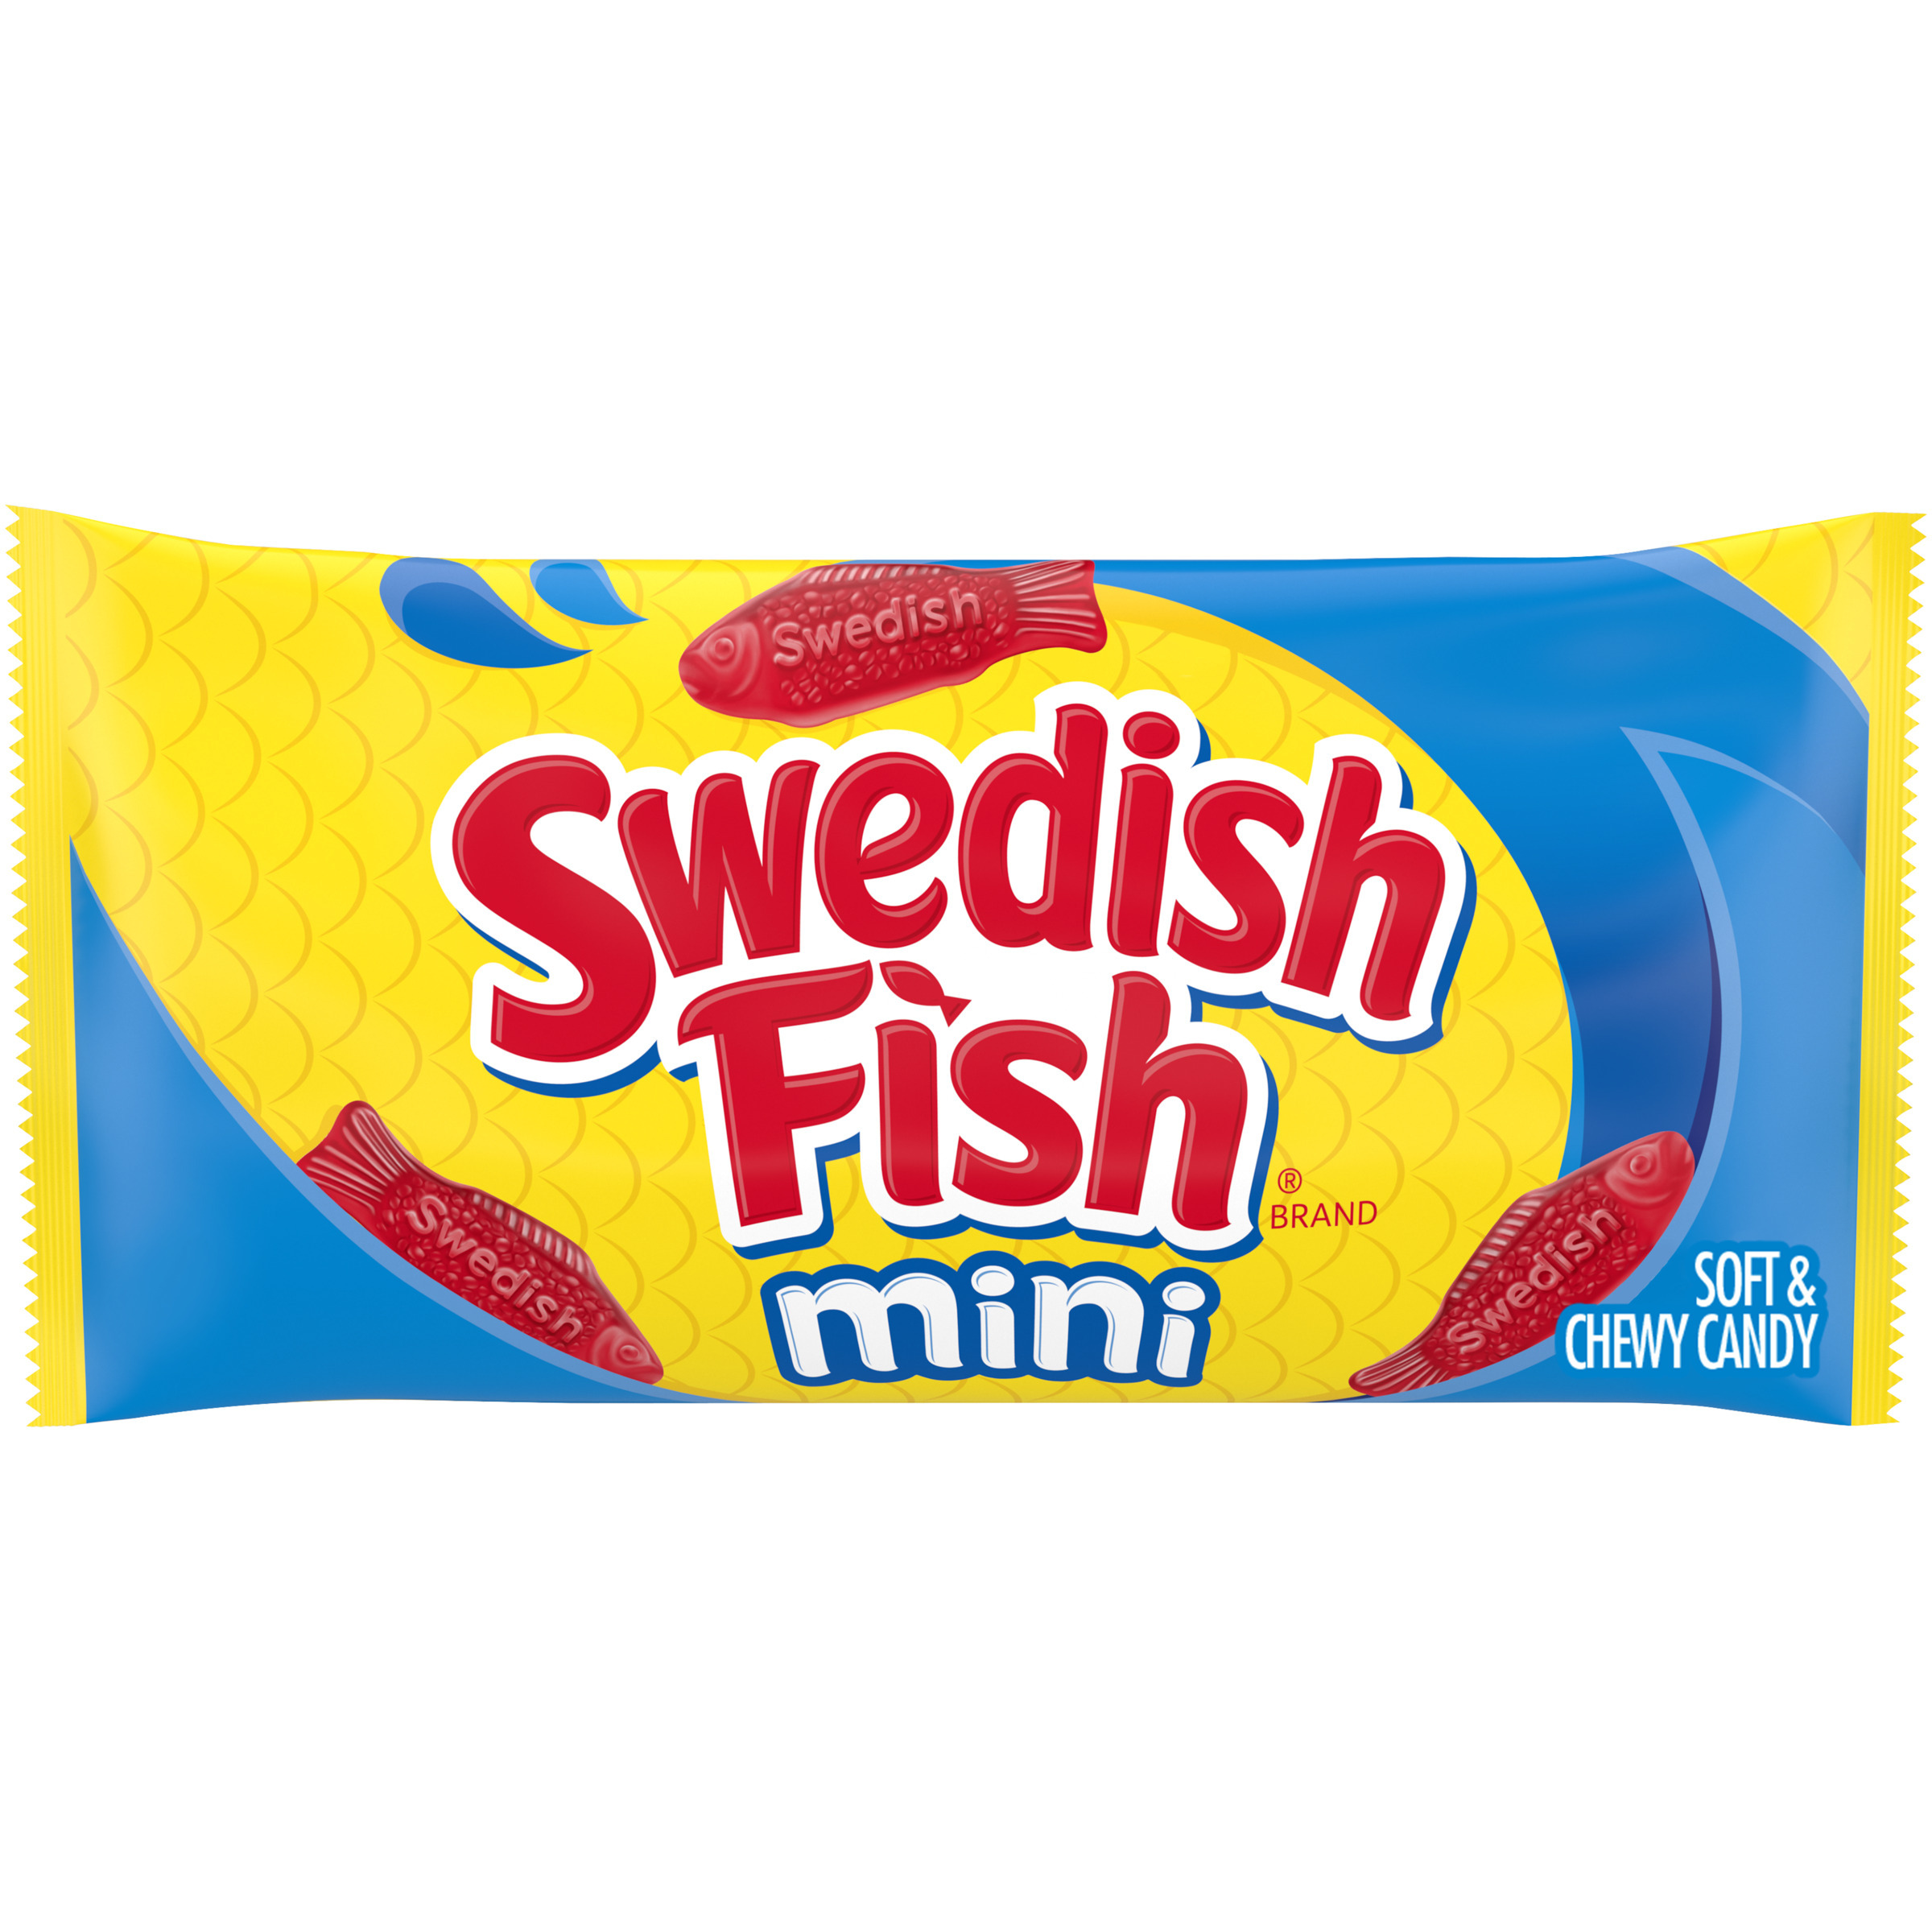 SWEDISH FISH Soft & Chewy Candy, 2 oz-0